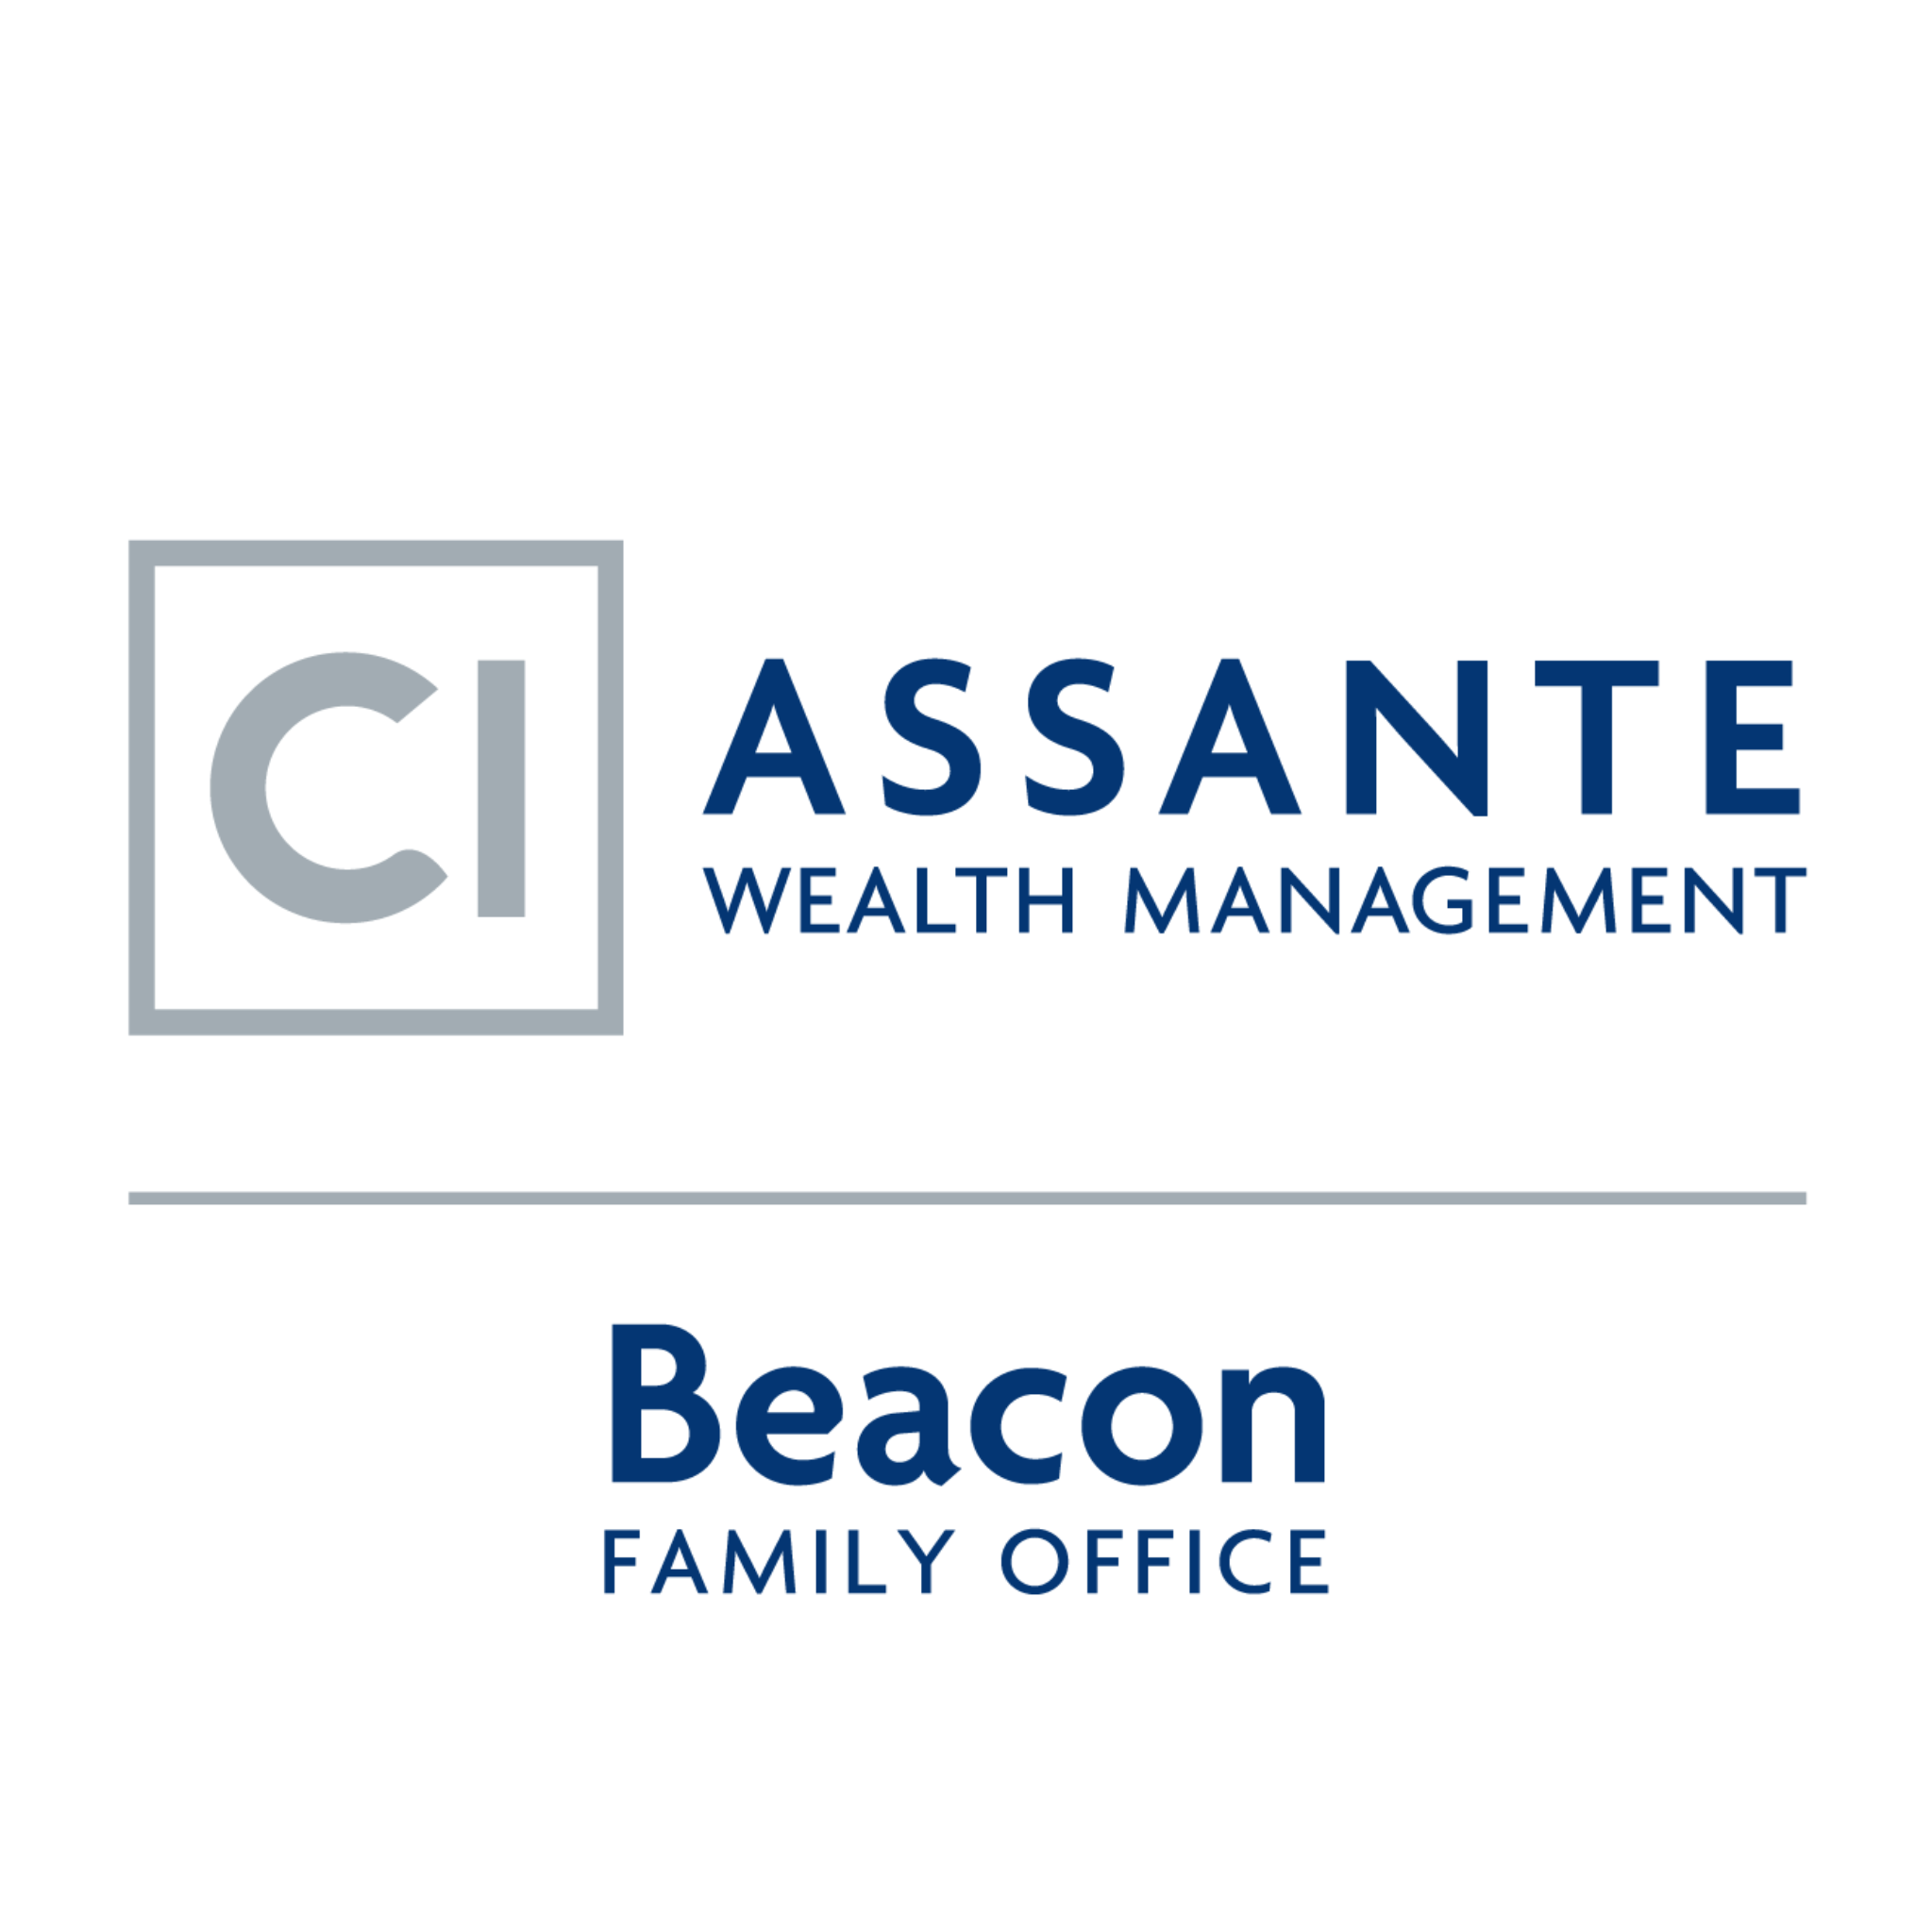 Beacon Family Office at Assante